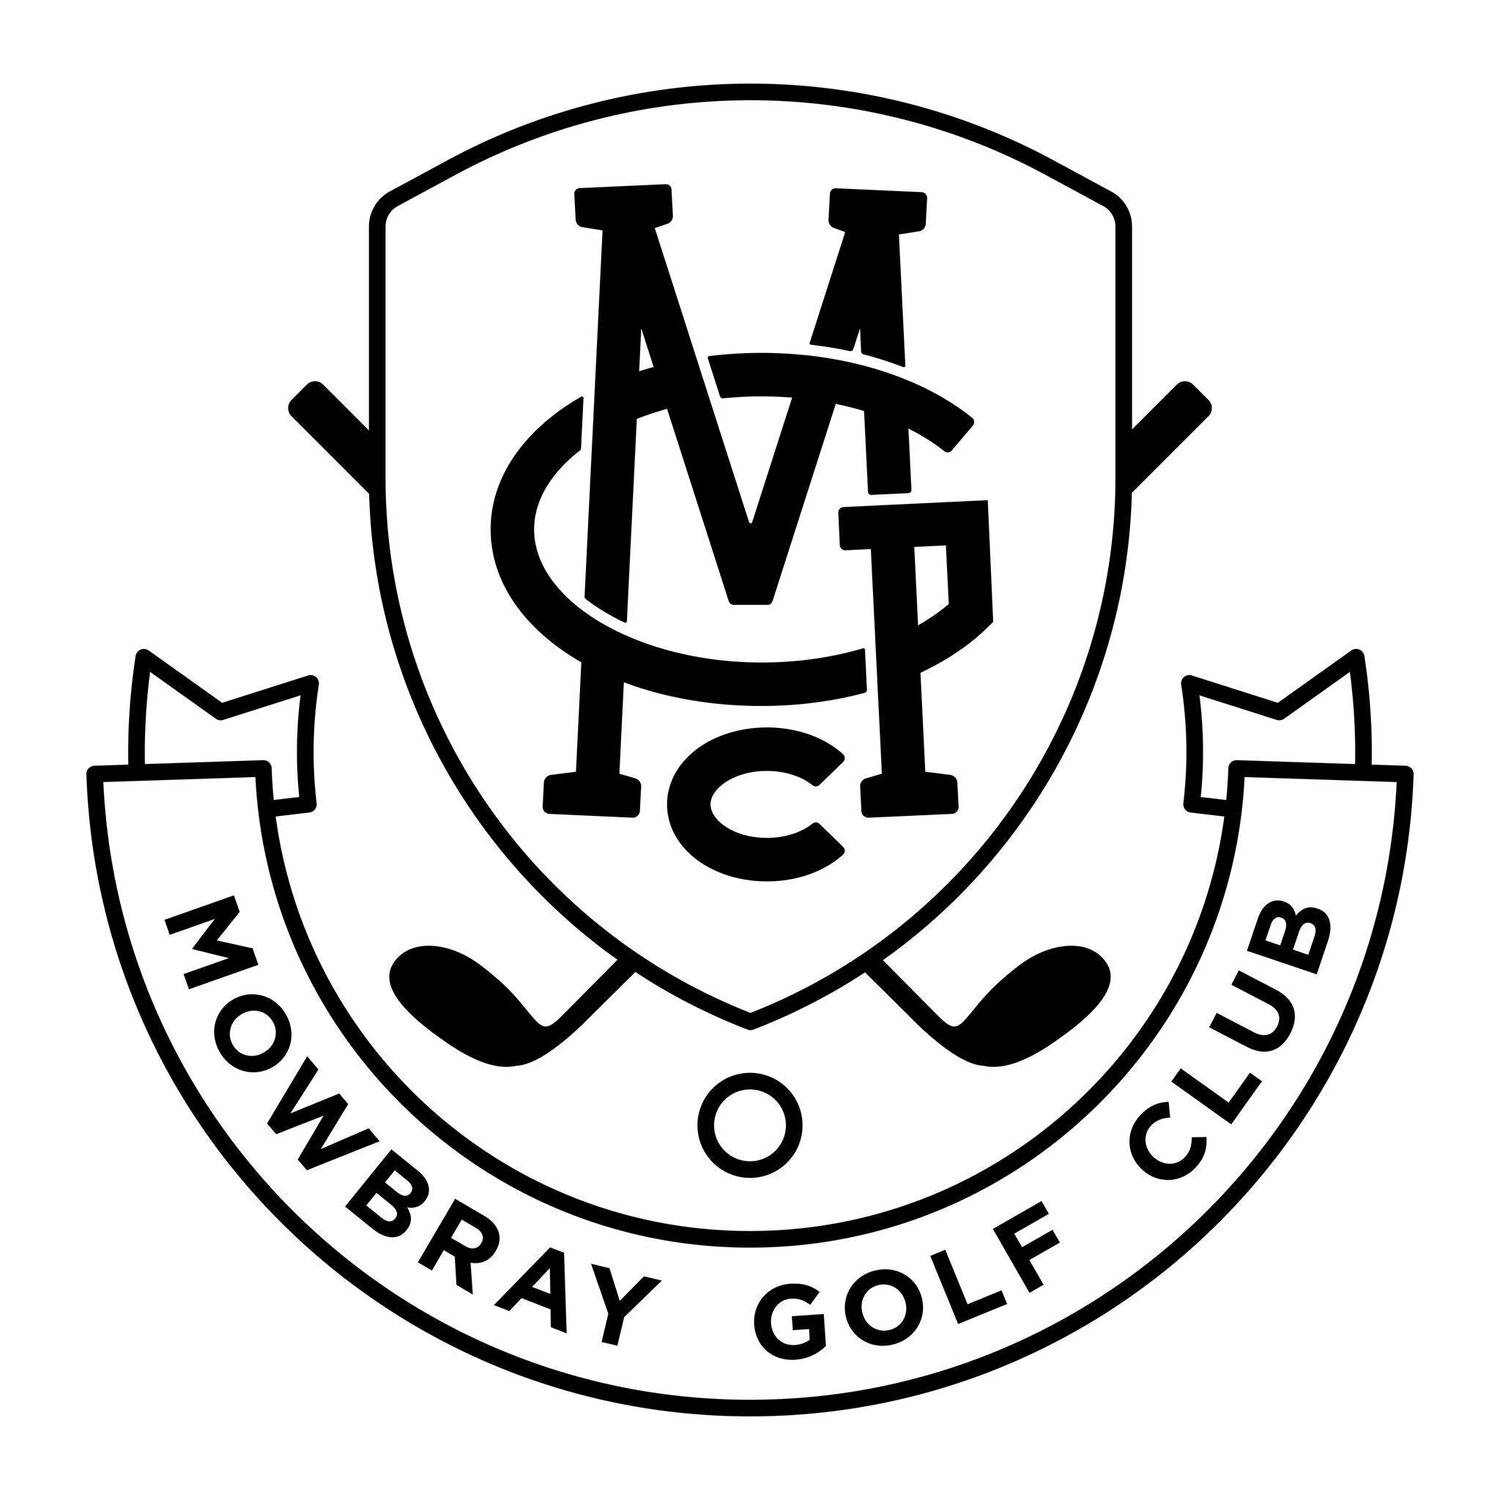 Mowbray Golf Club